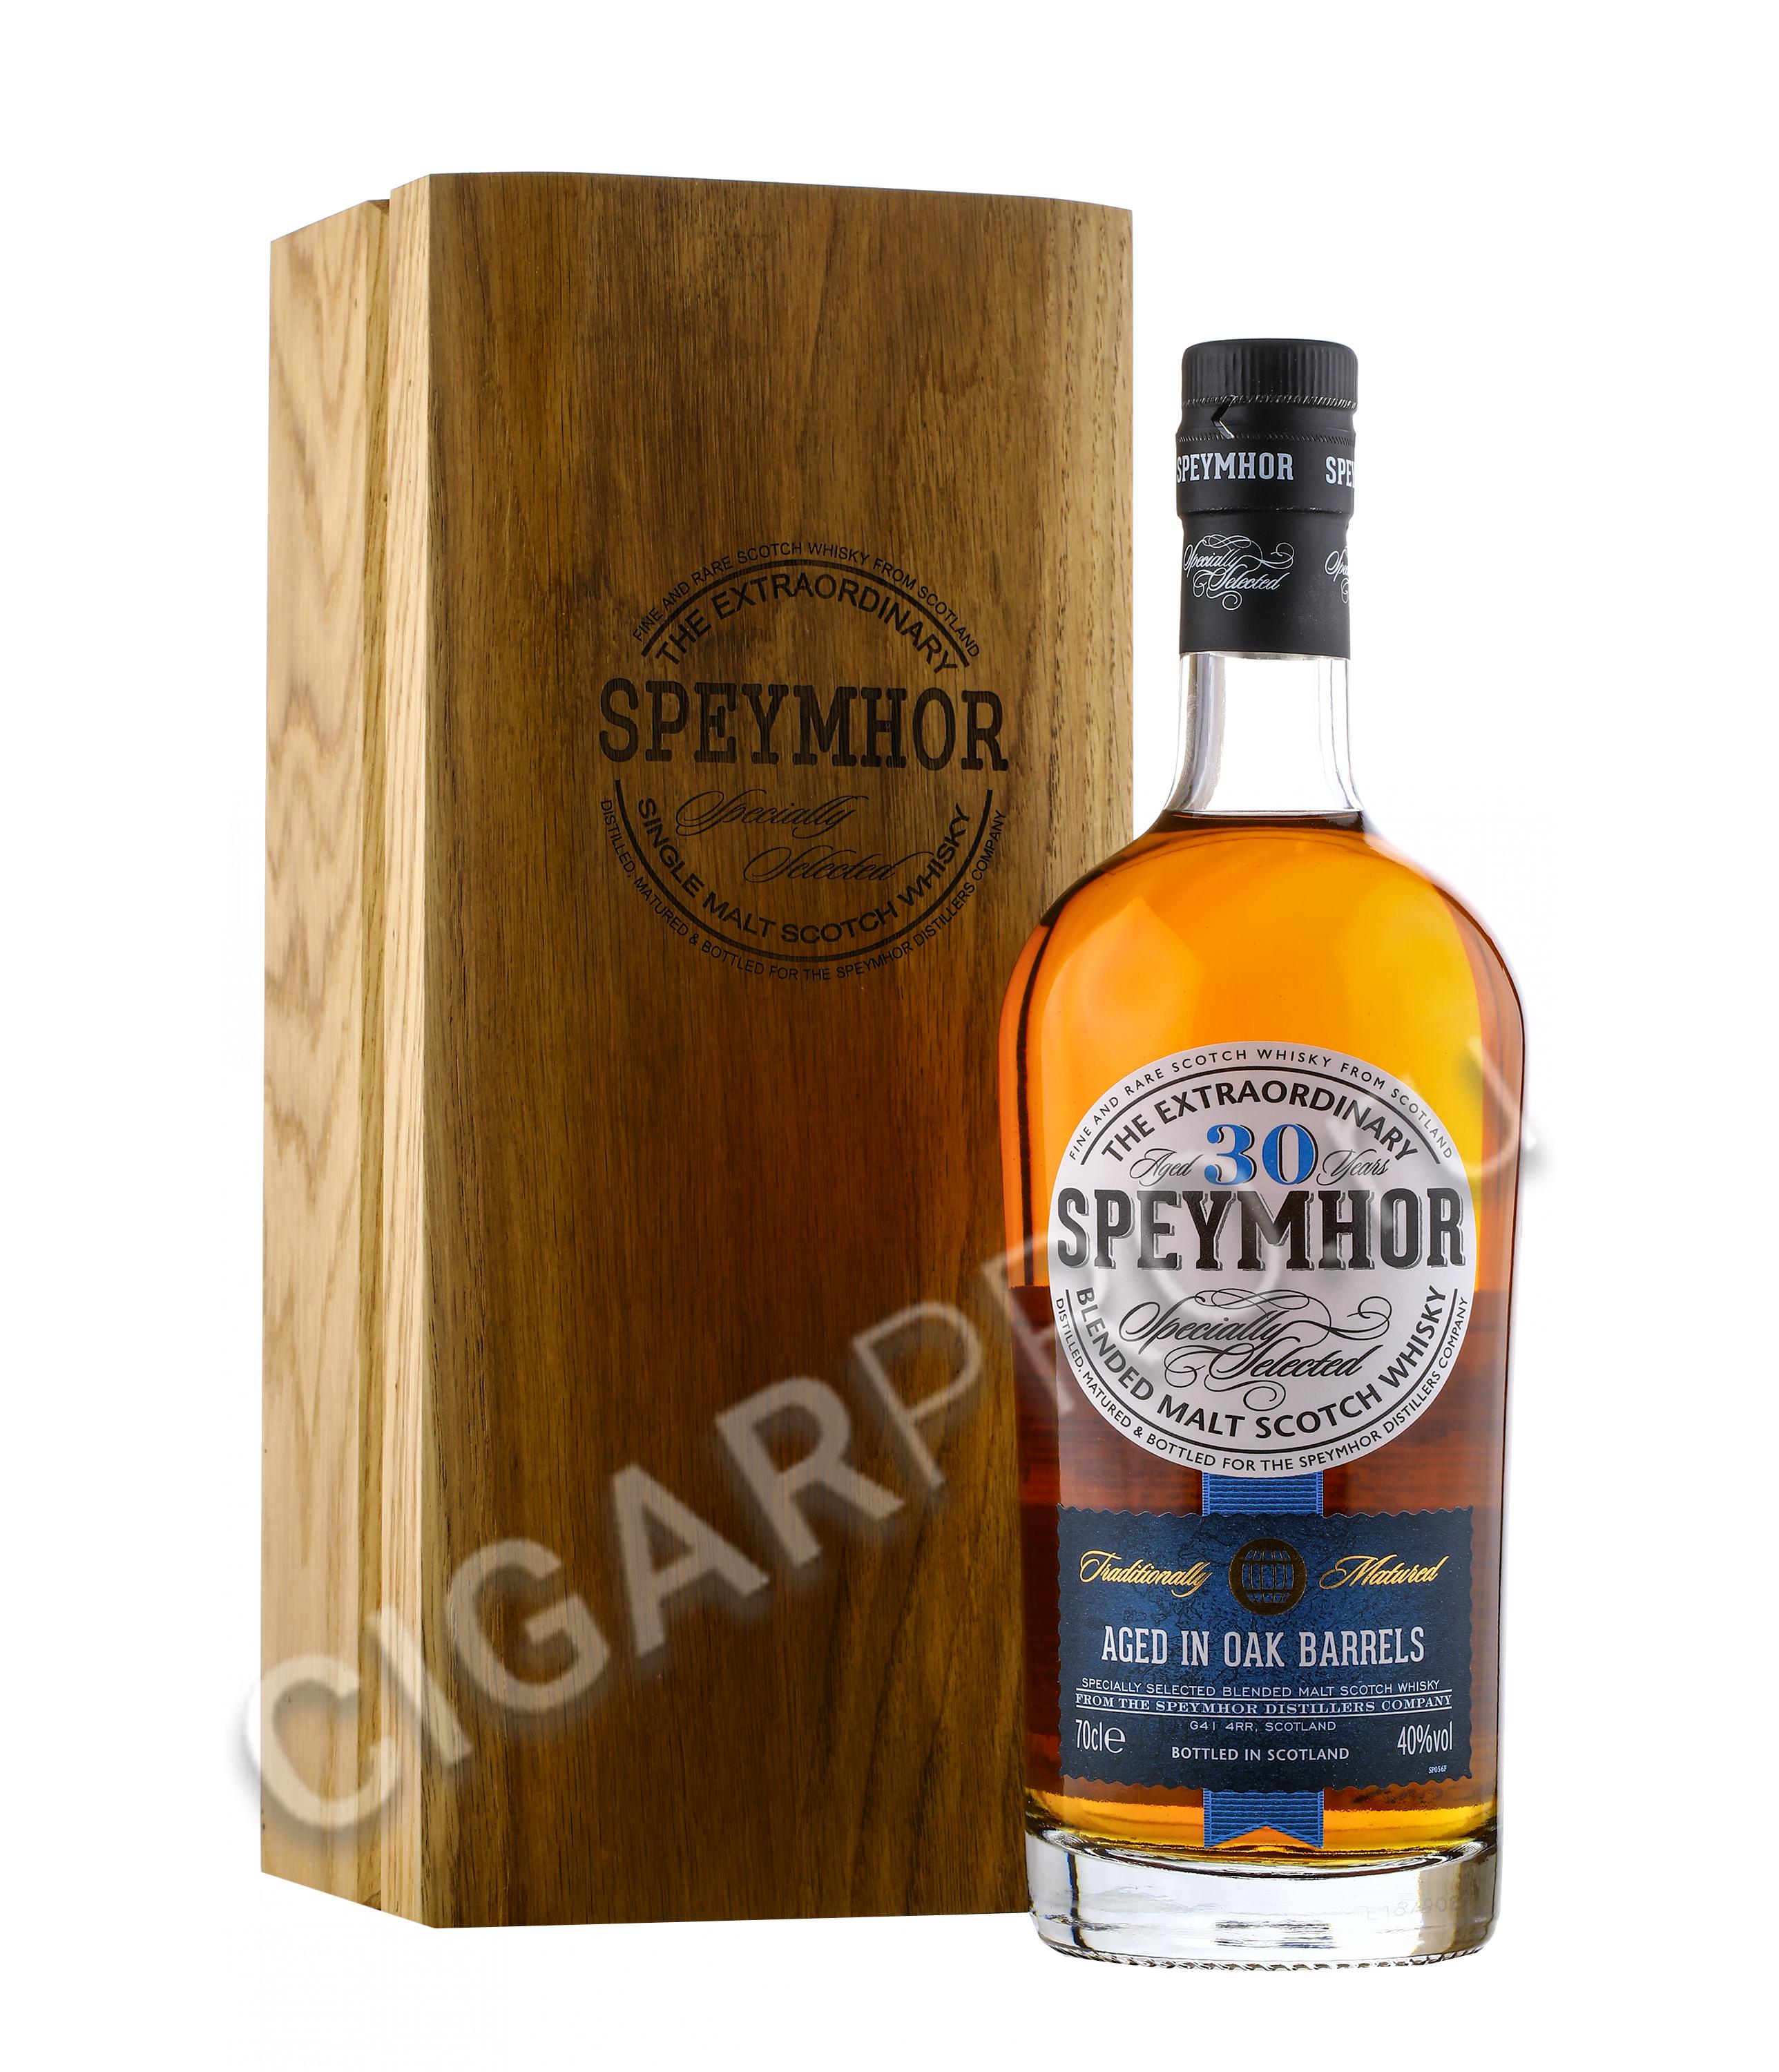 Speymhor single malt scotch whisky